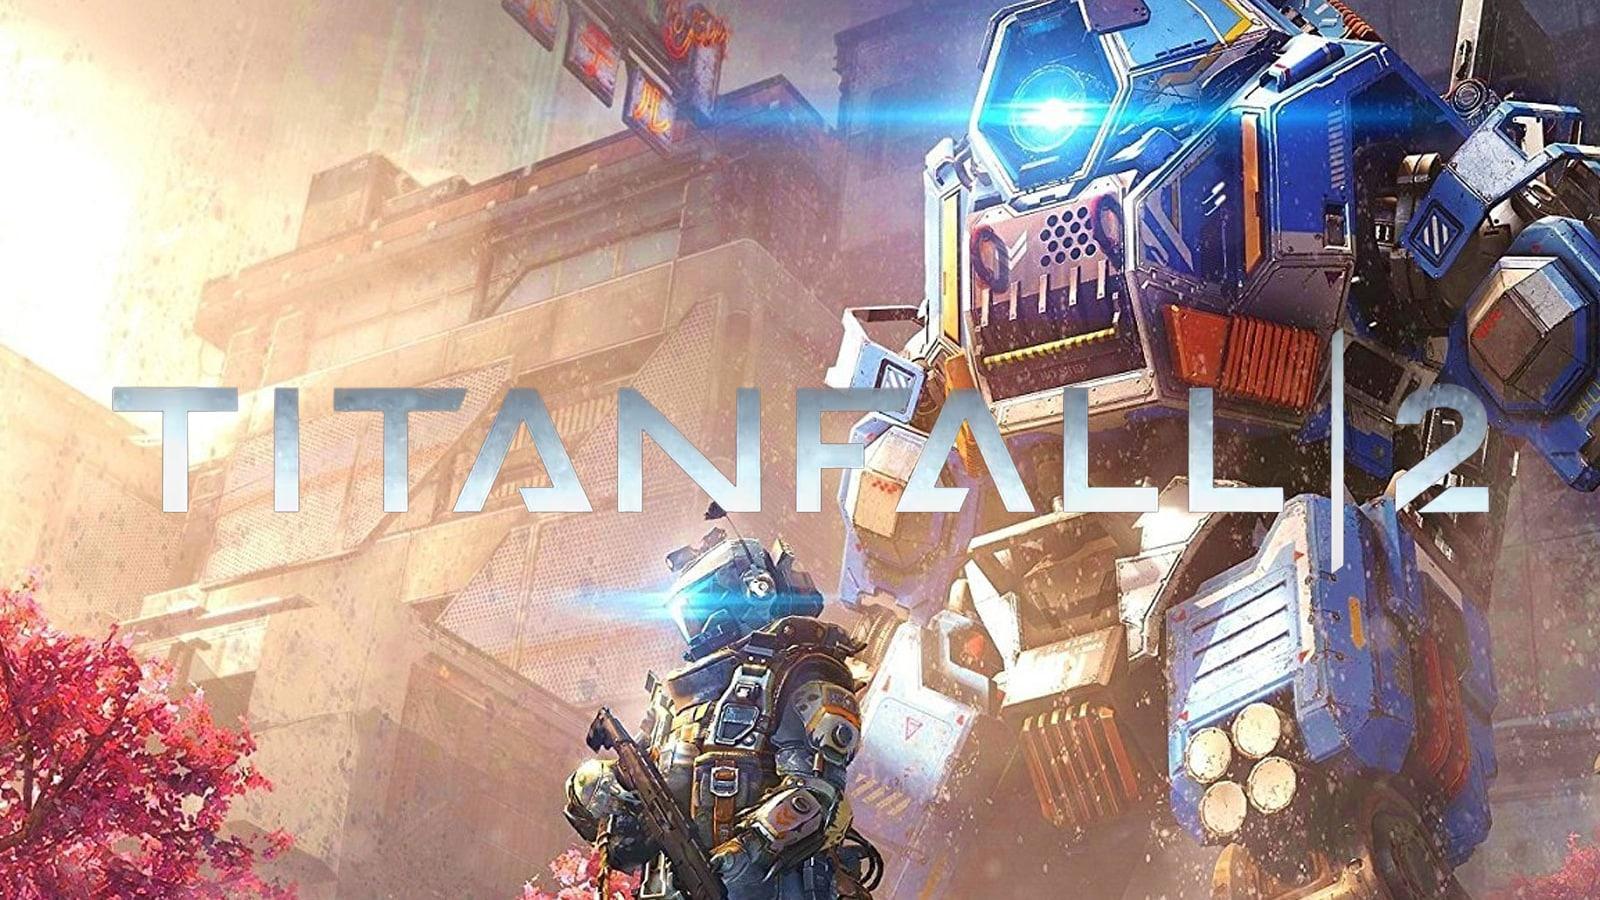 YO NEW GAME MODE : r/titanfall